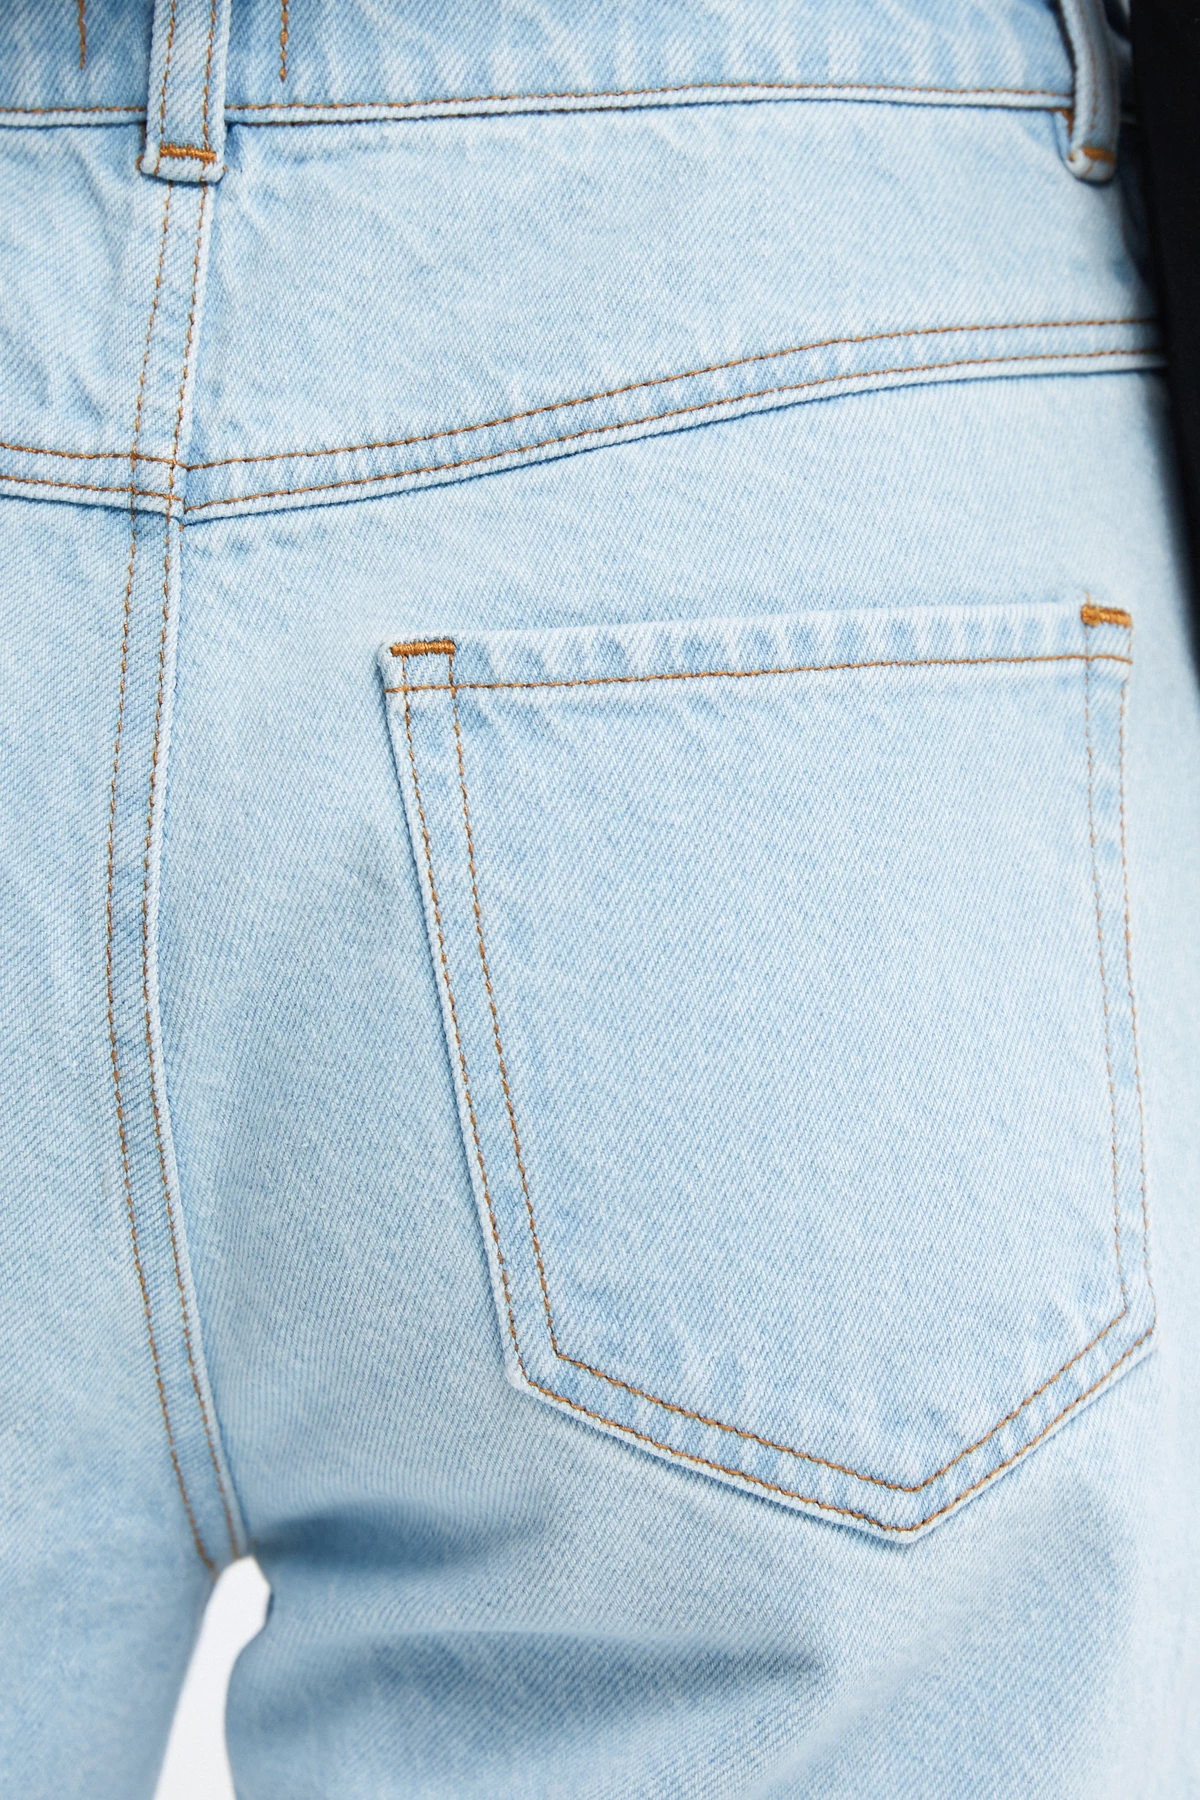 Tapered distressed light blue denim jeans, photo 5